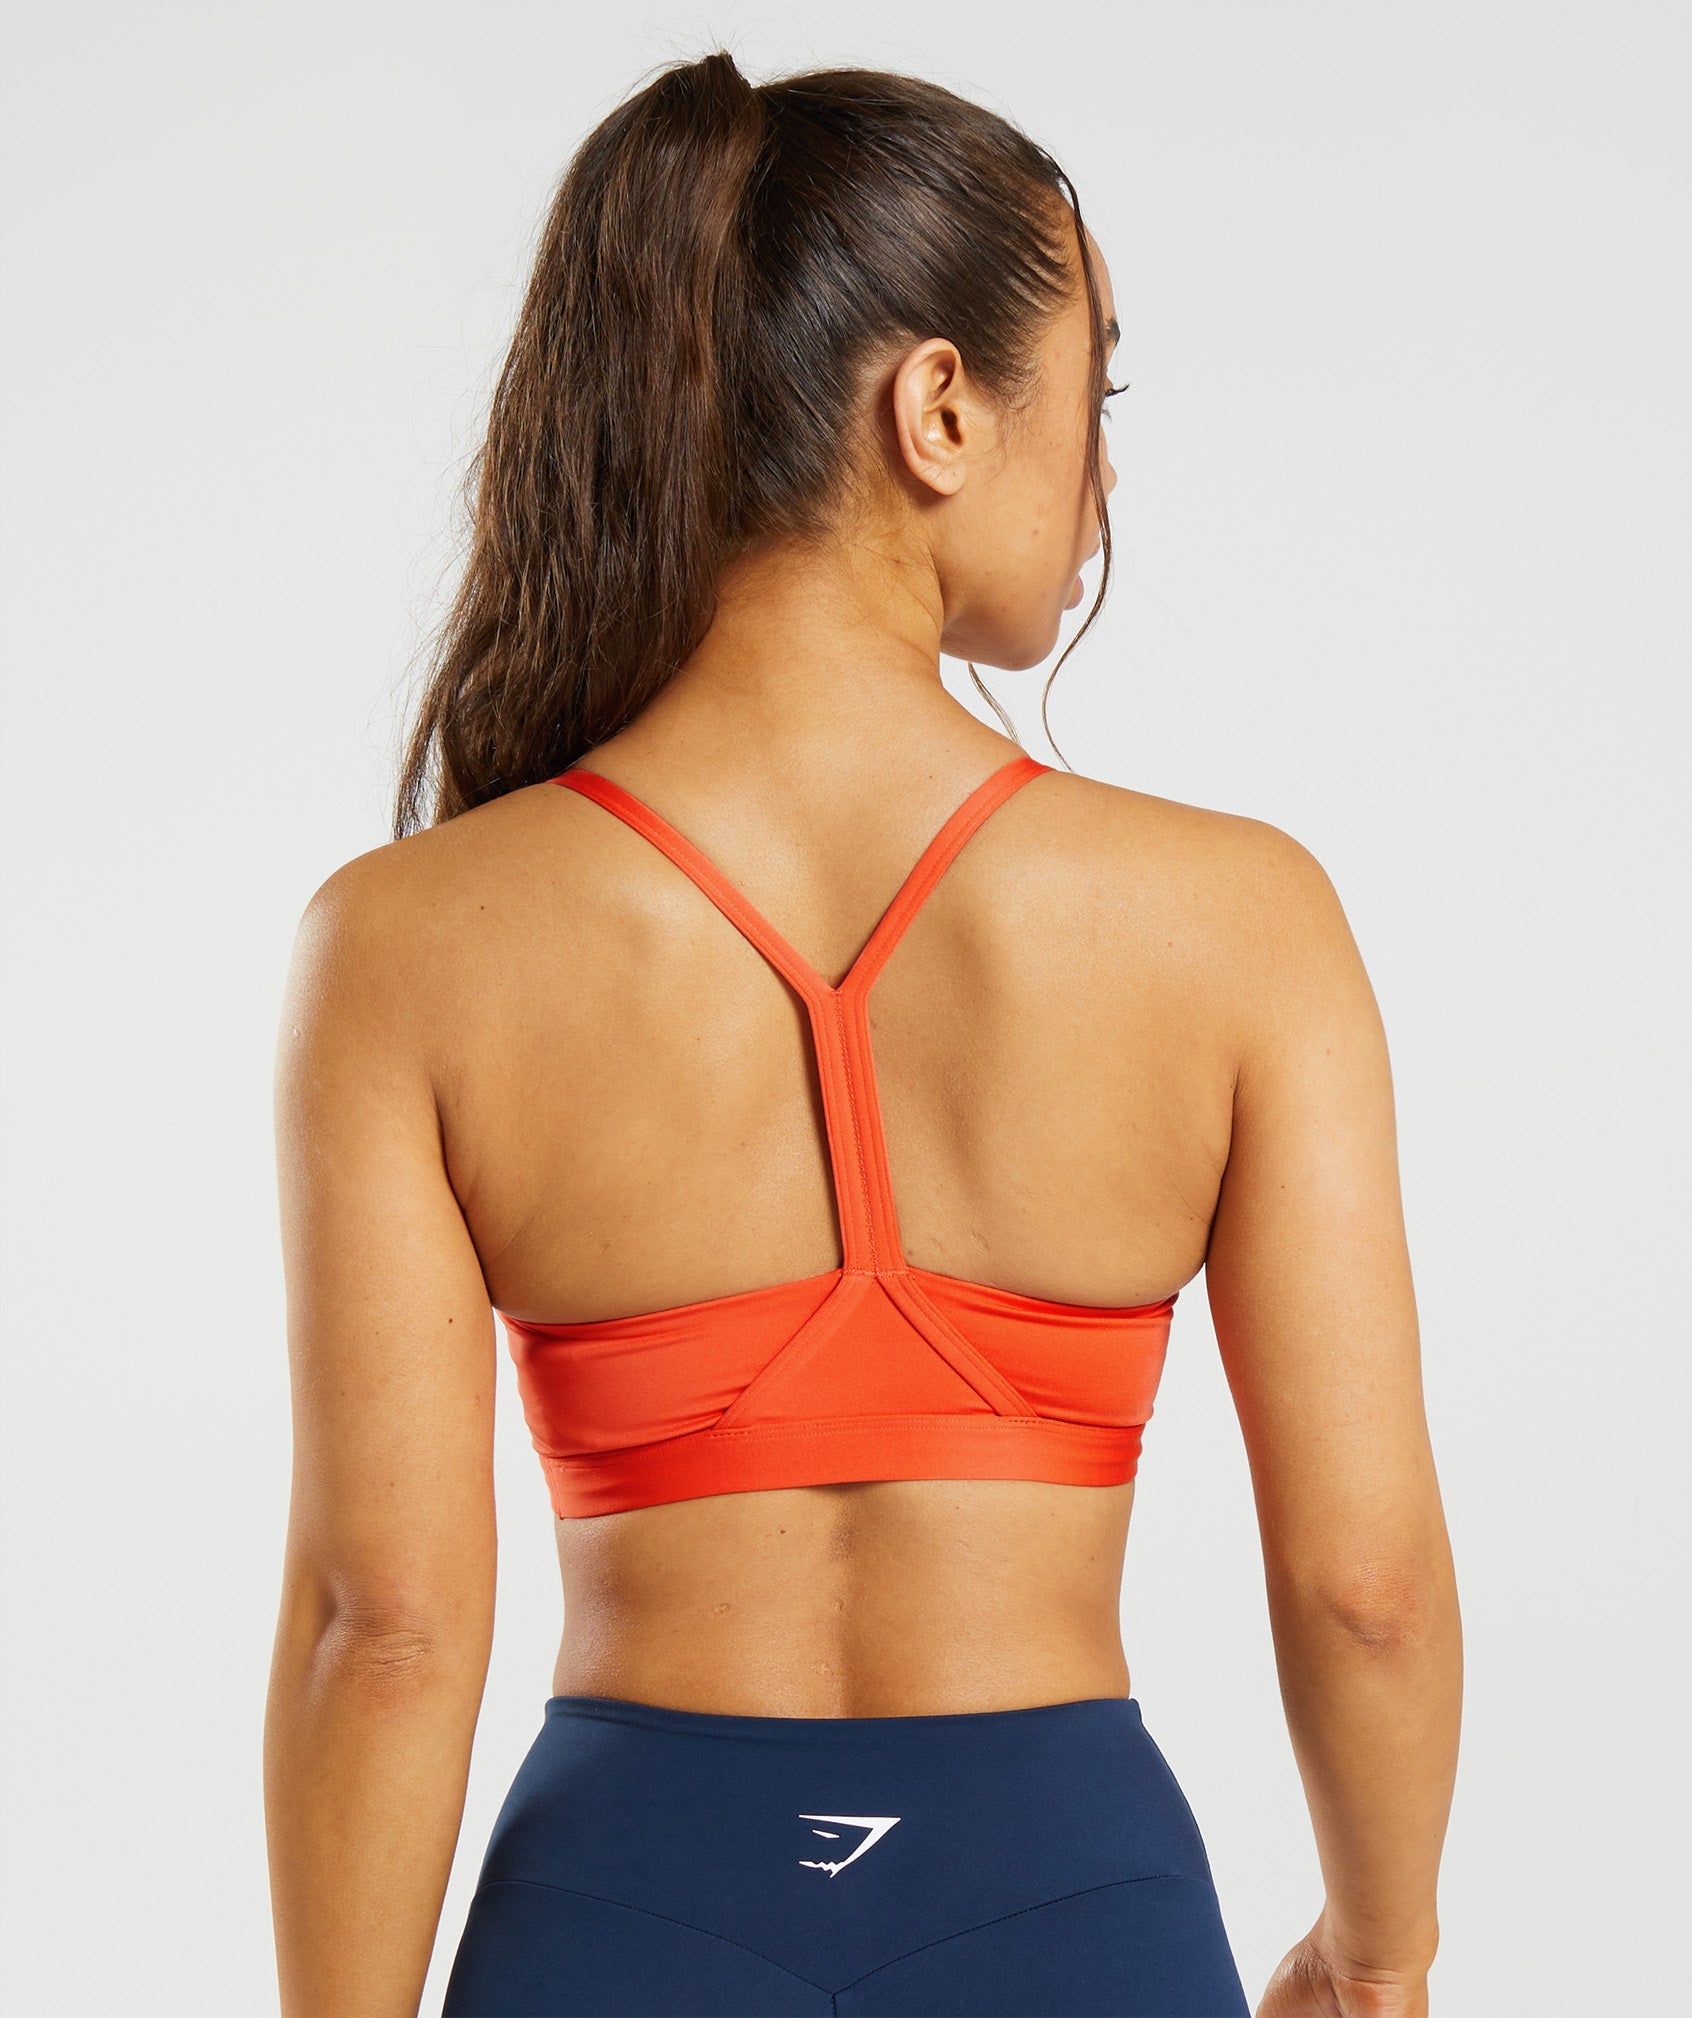 Entyinea Strappy Sports Bra for Women Longline Padded Crop Tank Yoga Bras  Workout Fitness Top Orange XXL 